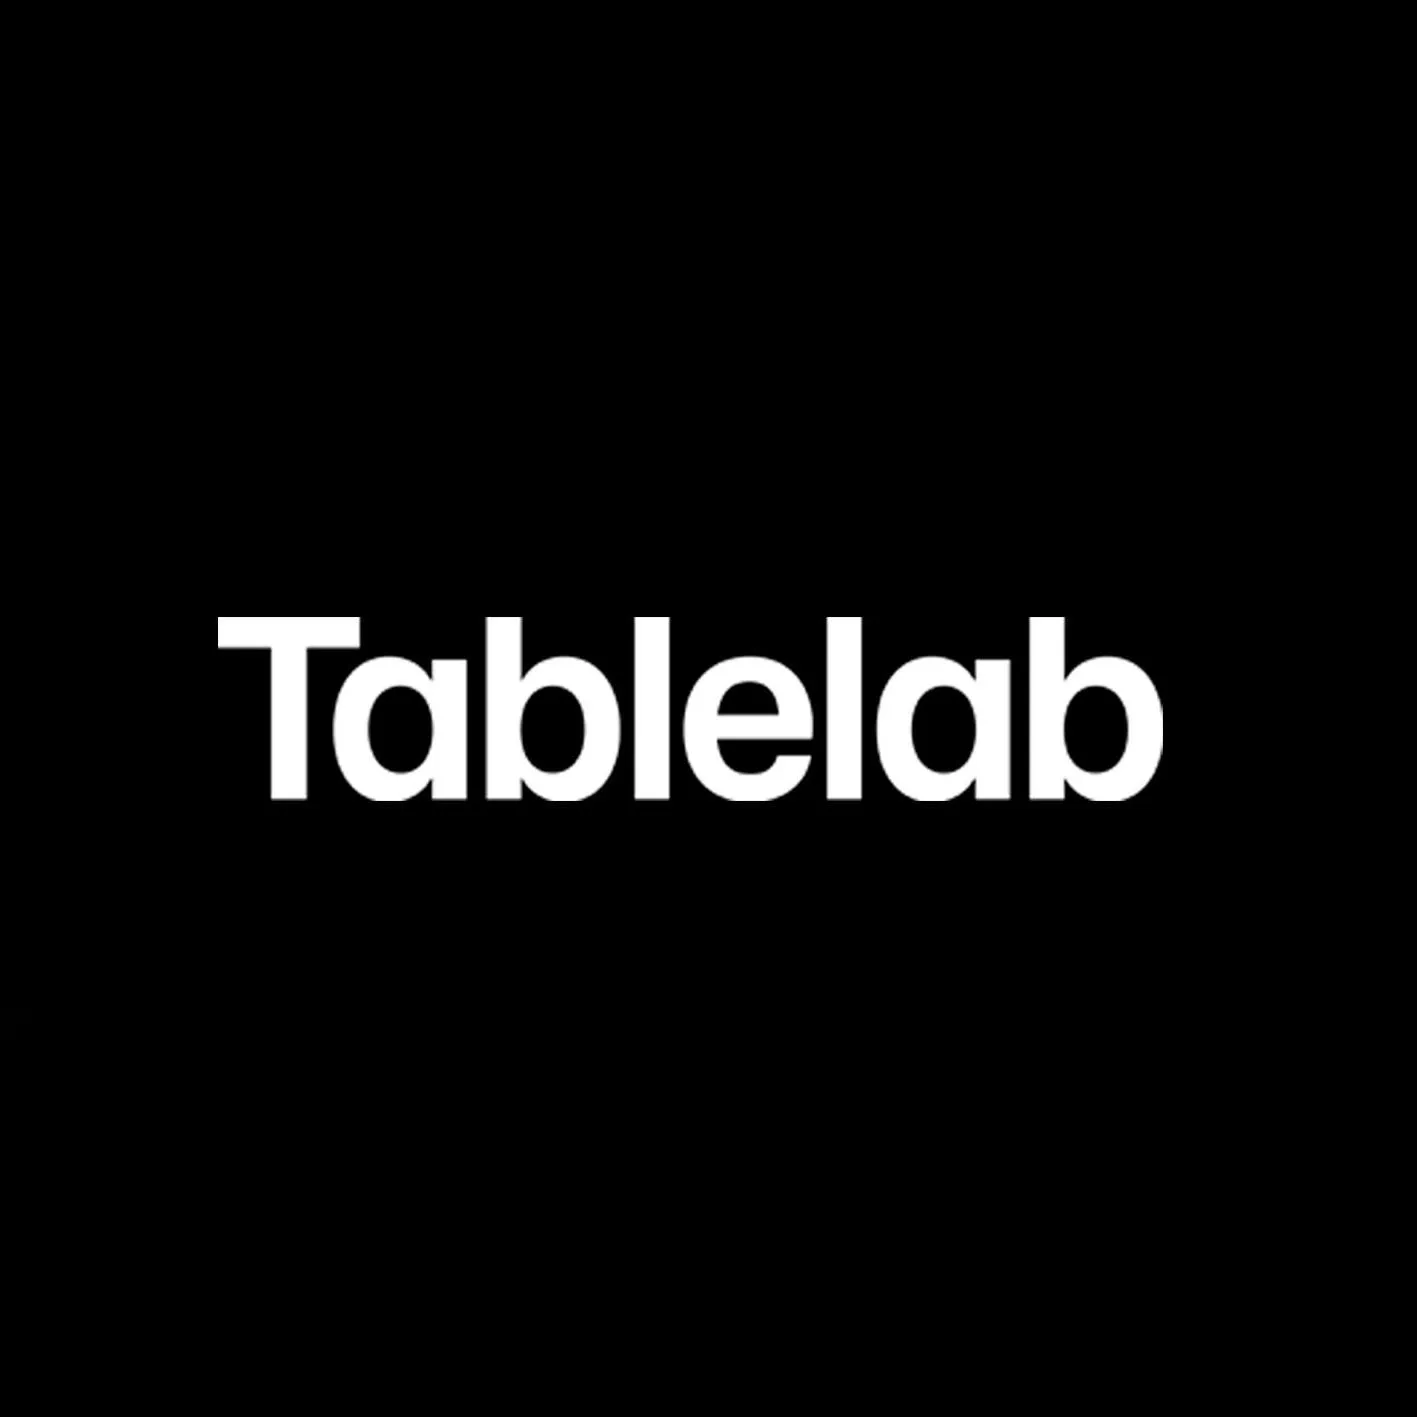 Tablelab